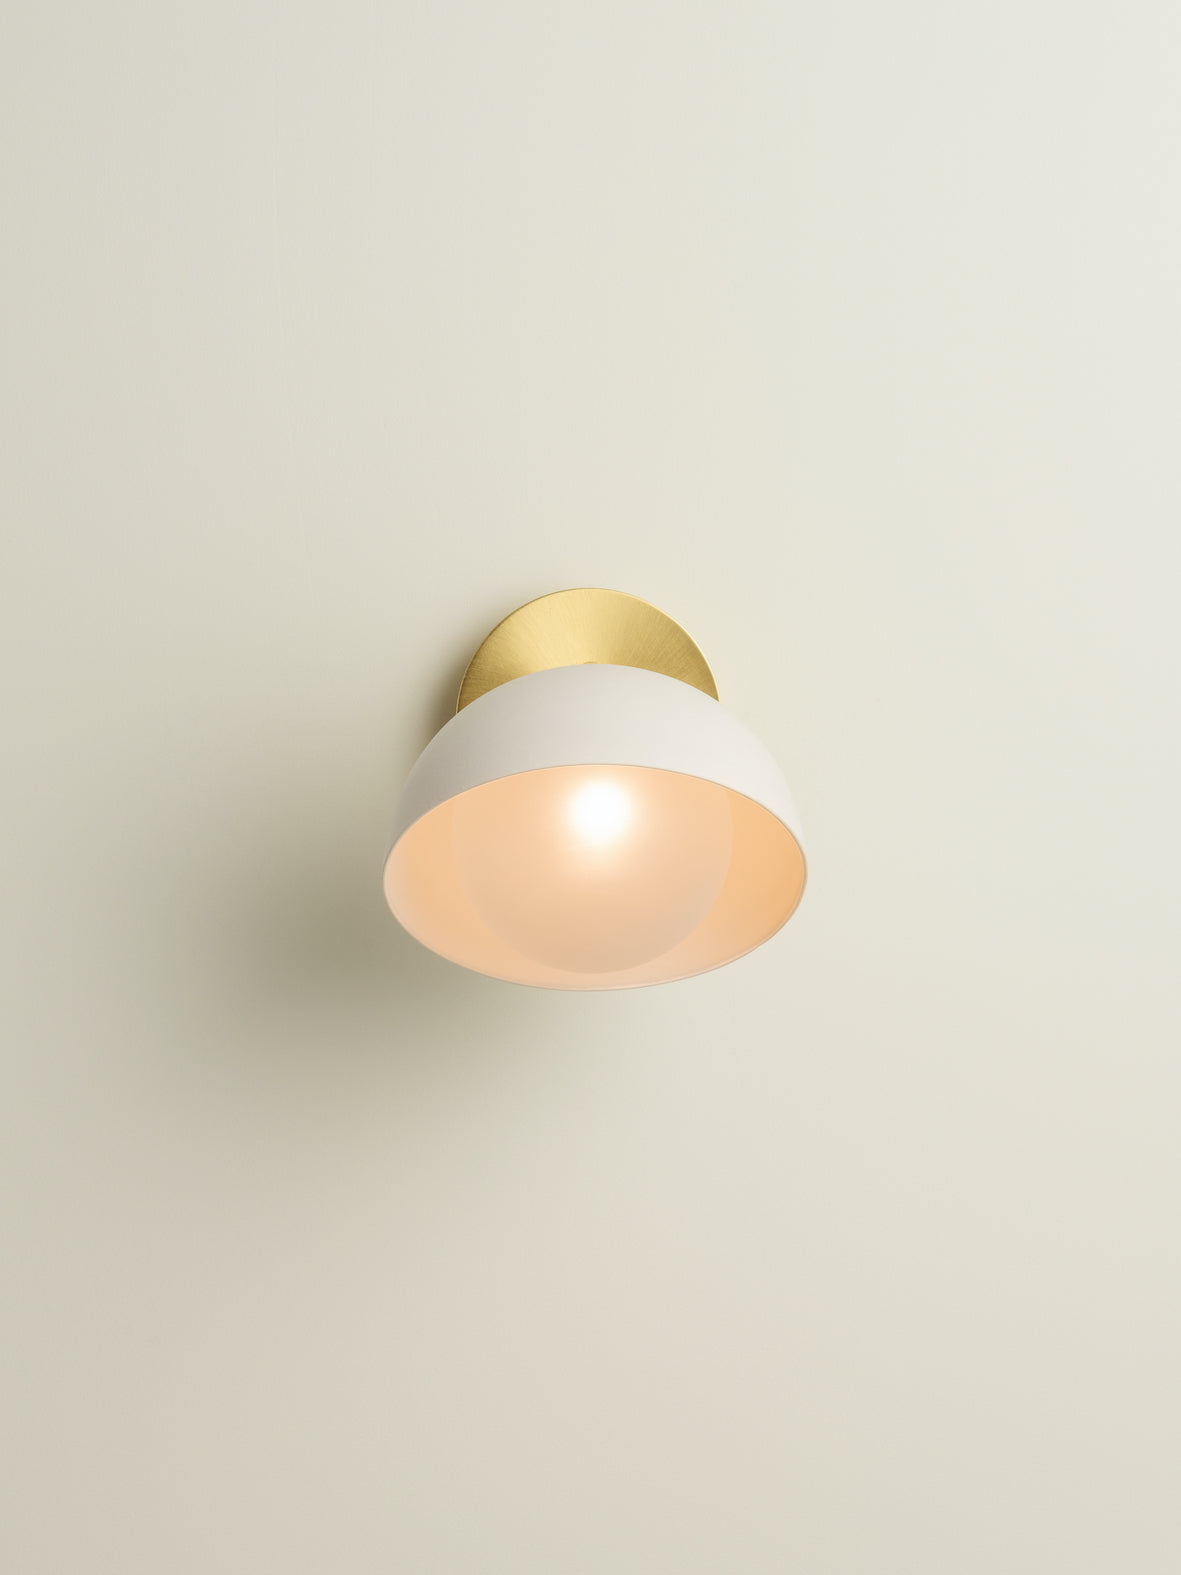 Porsa - 1 light brushed brass and warm white porcelain wall light | Wall Light | Lights & Lamps Inc | Modern Affordable Designer Lighting | USA